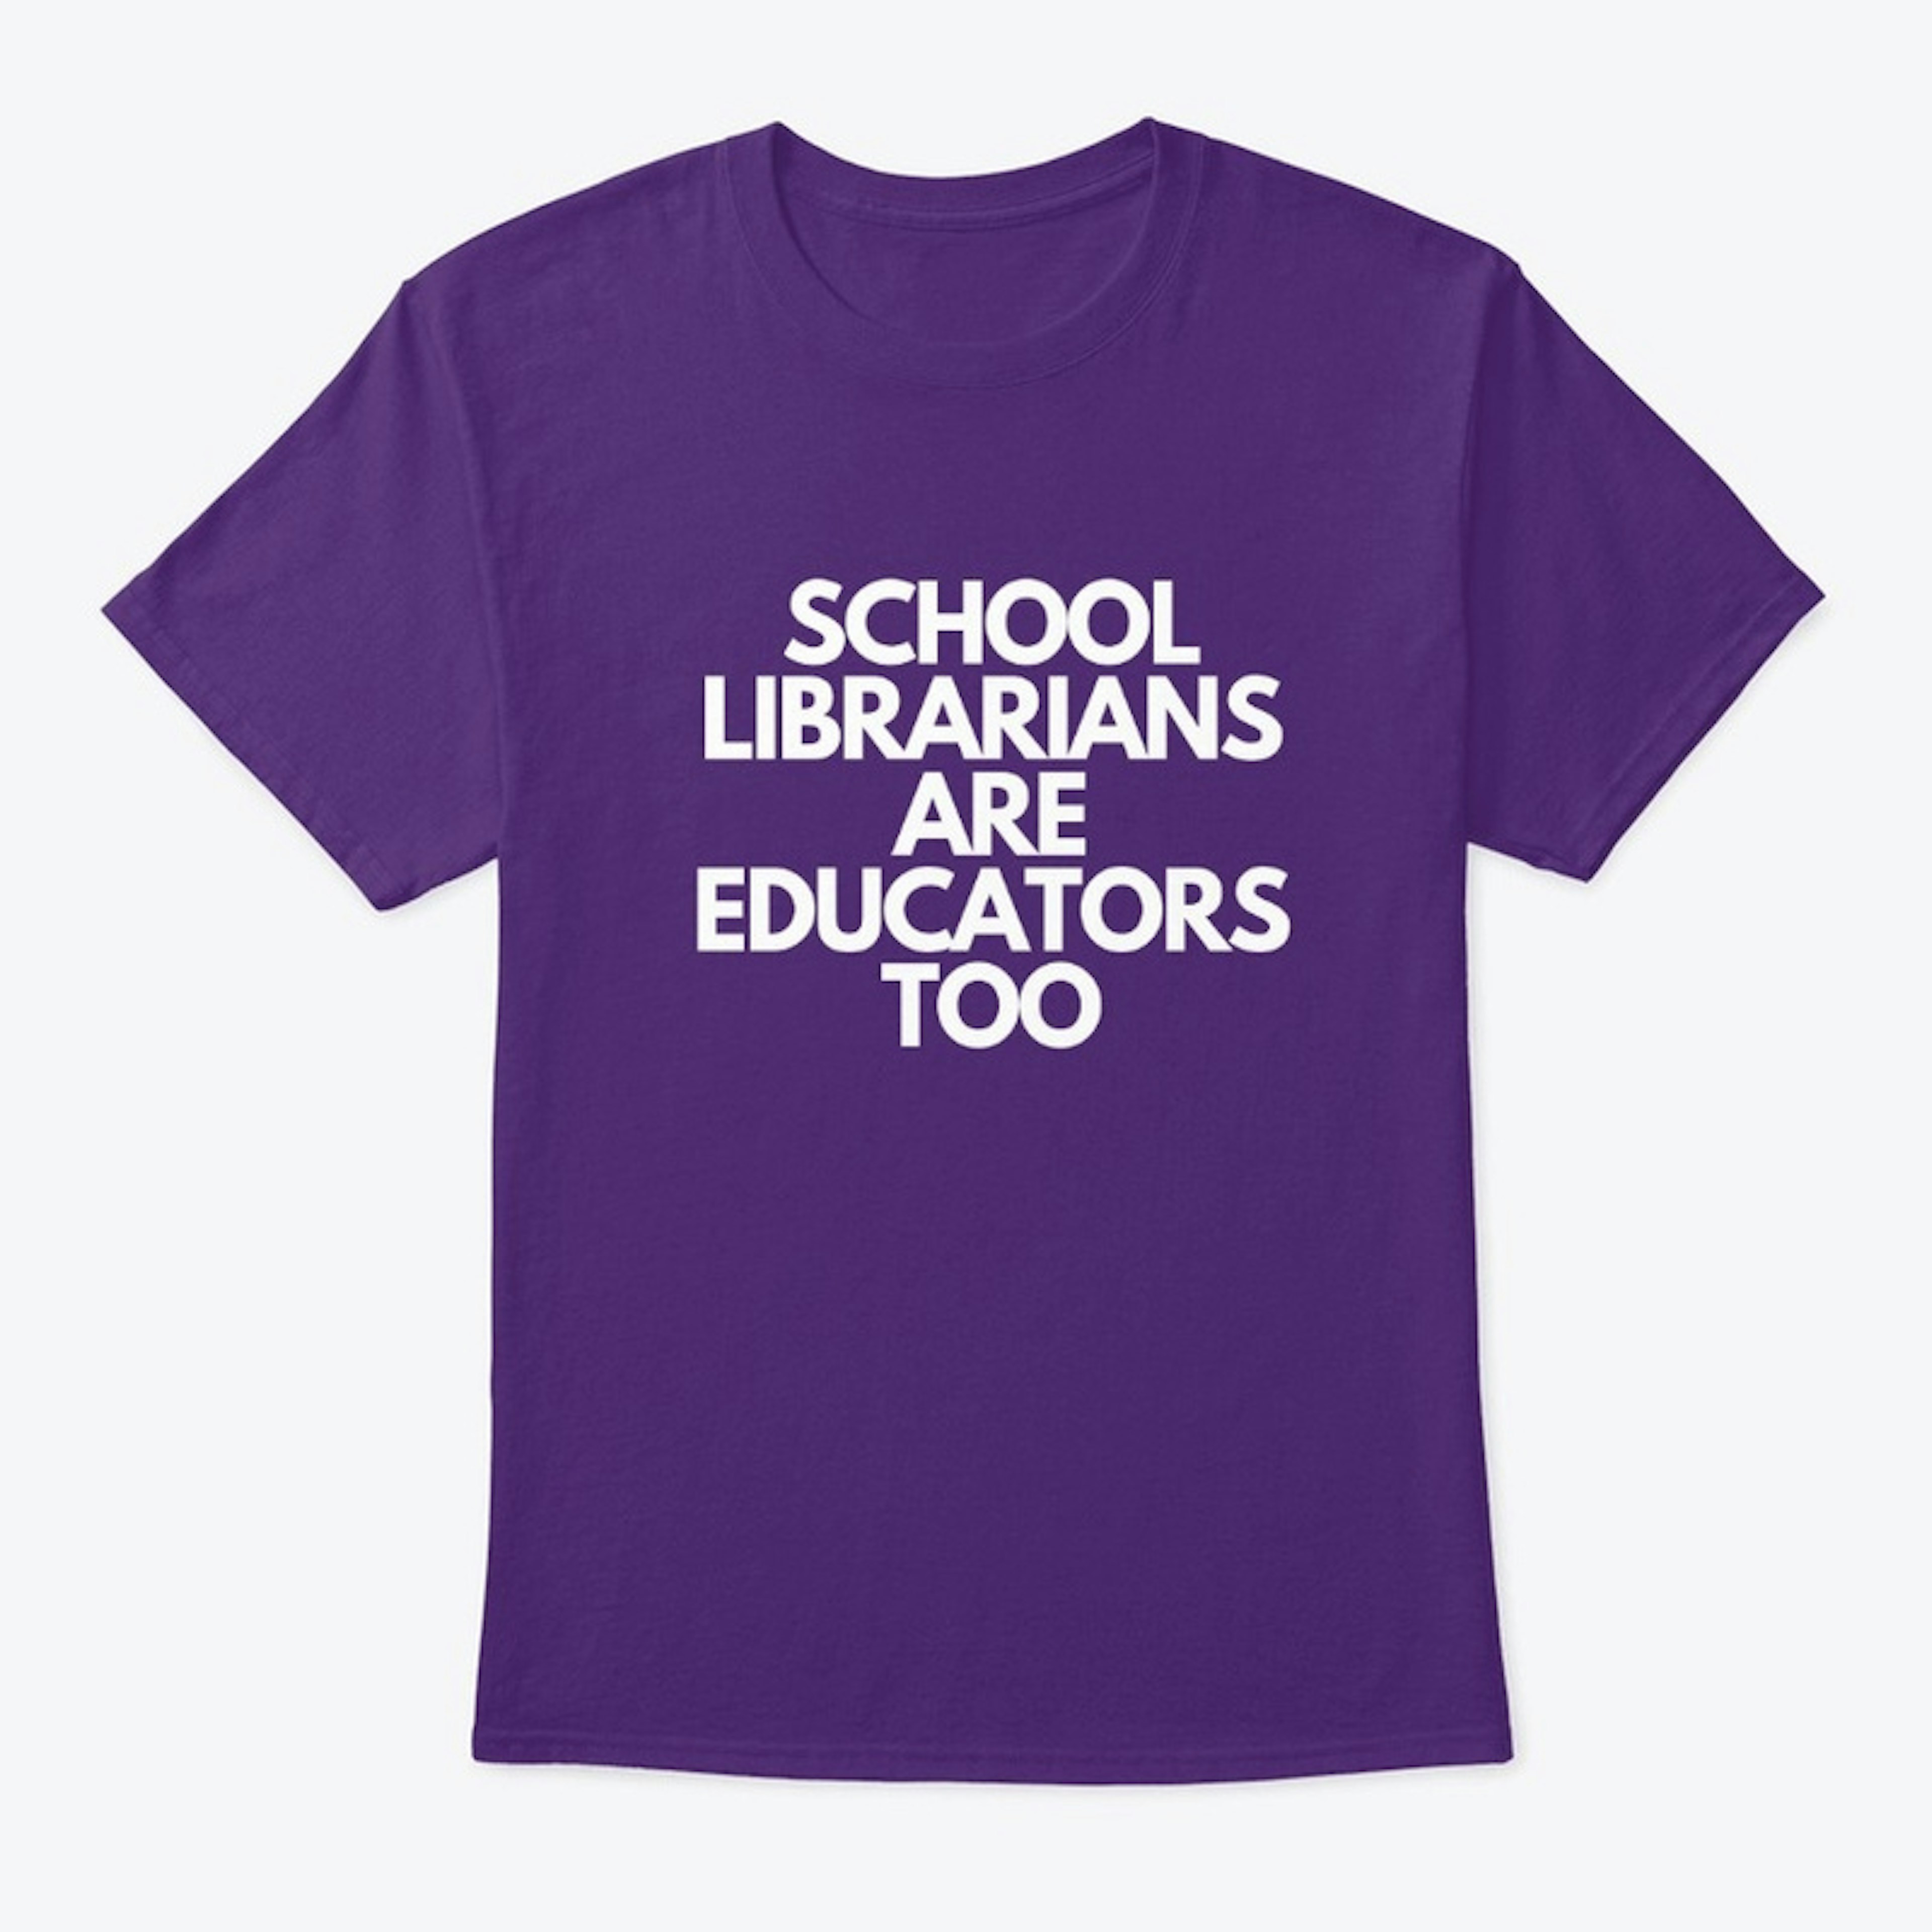 School Librarians Are Educators Too (II)